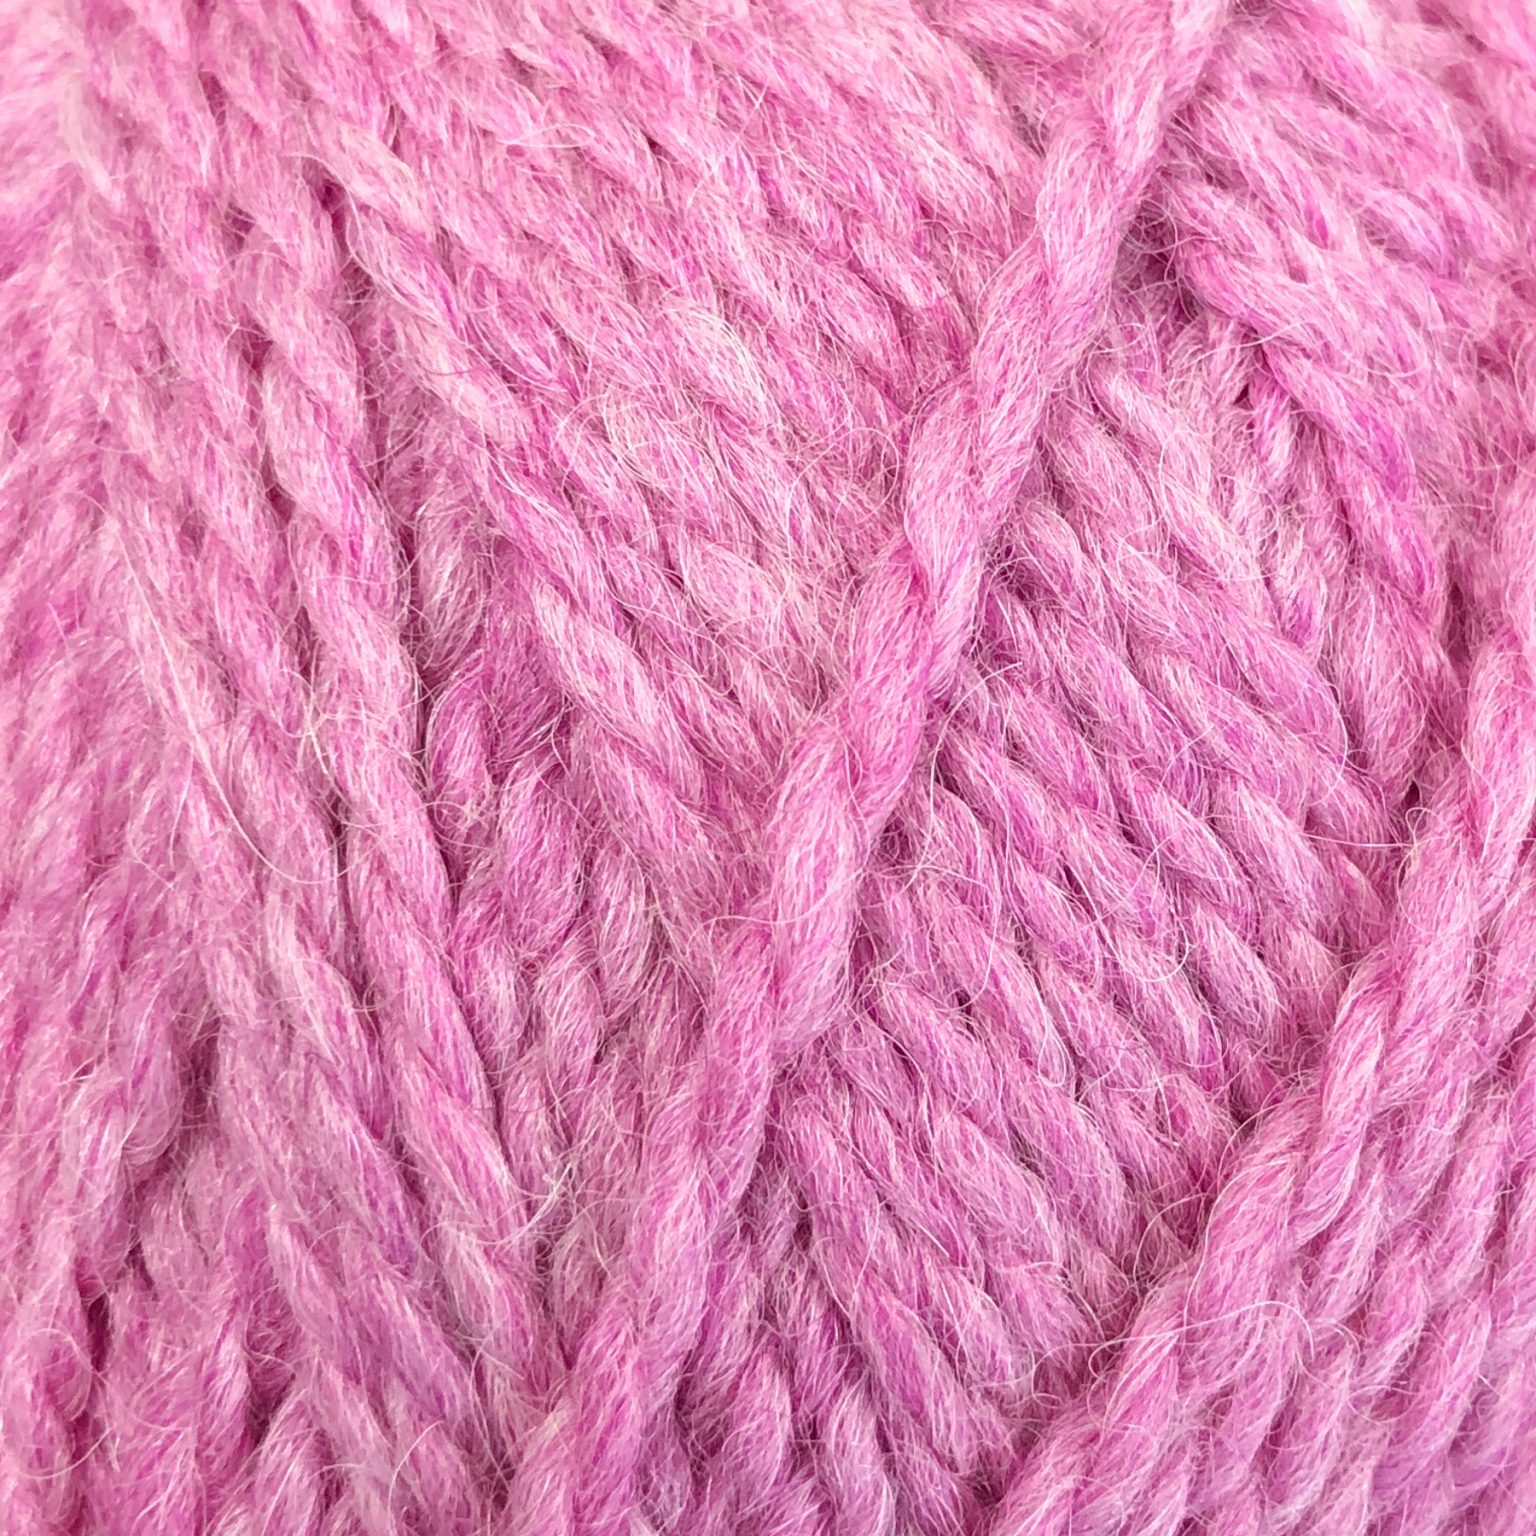 FIBRESPACE NZ Inca Spun Worsted | 10ply Alpaca, Fine Wool Blend buy kiwi yarn Pink 1788